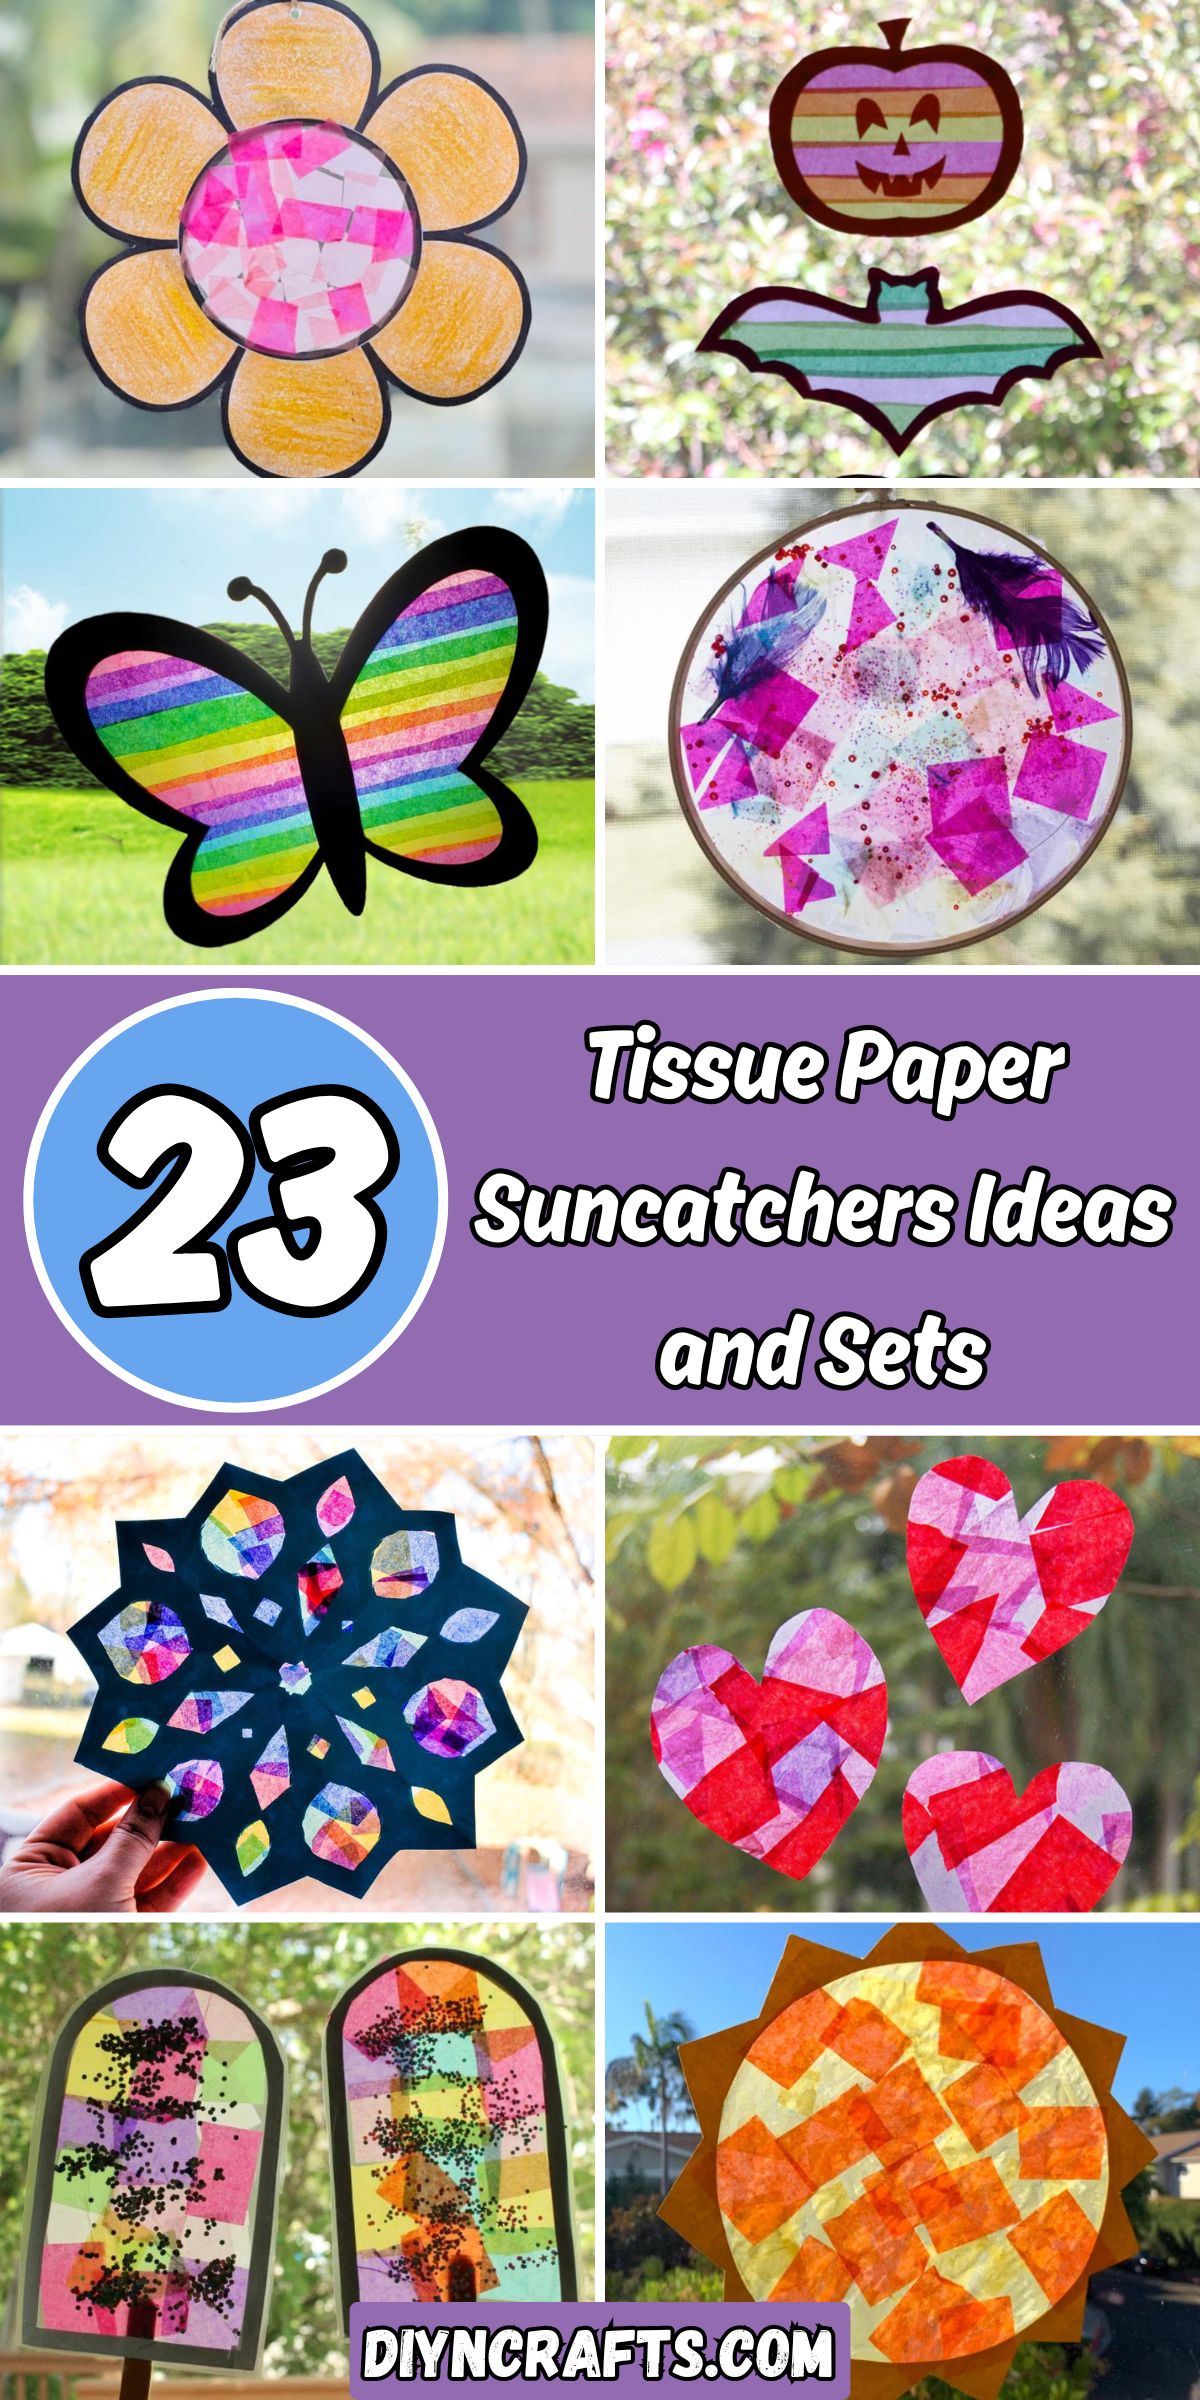 23 Tissue Paper Suncatchers Ideas and Sets collage.